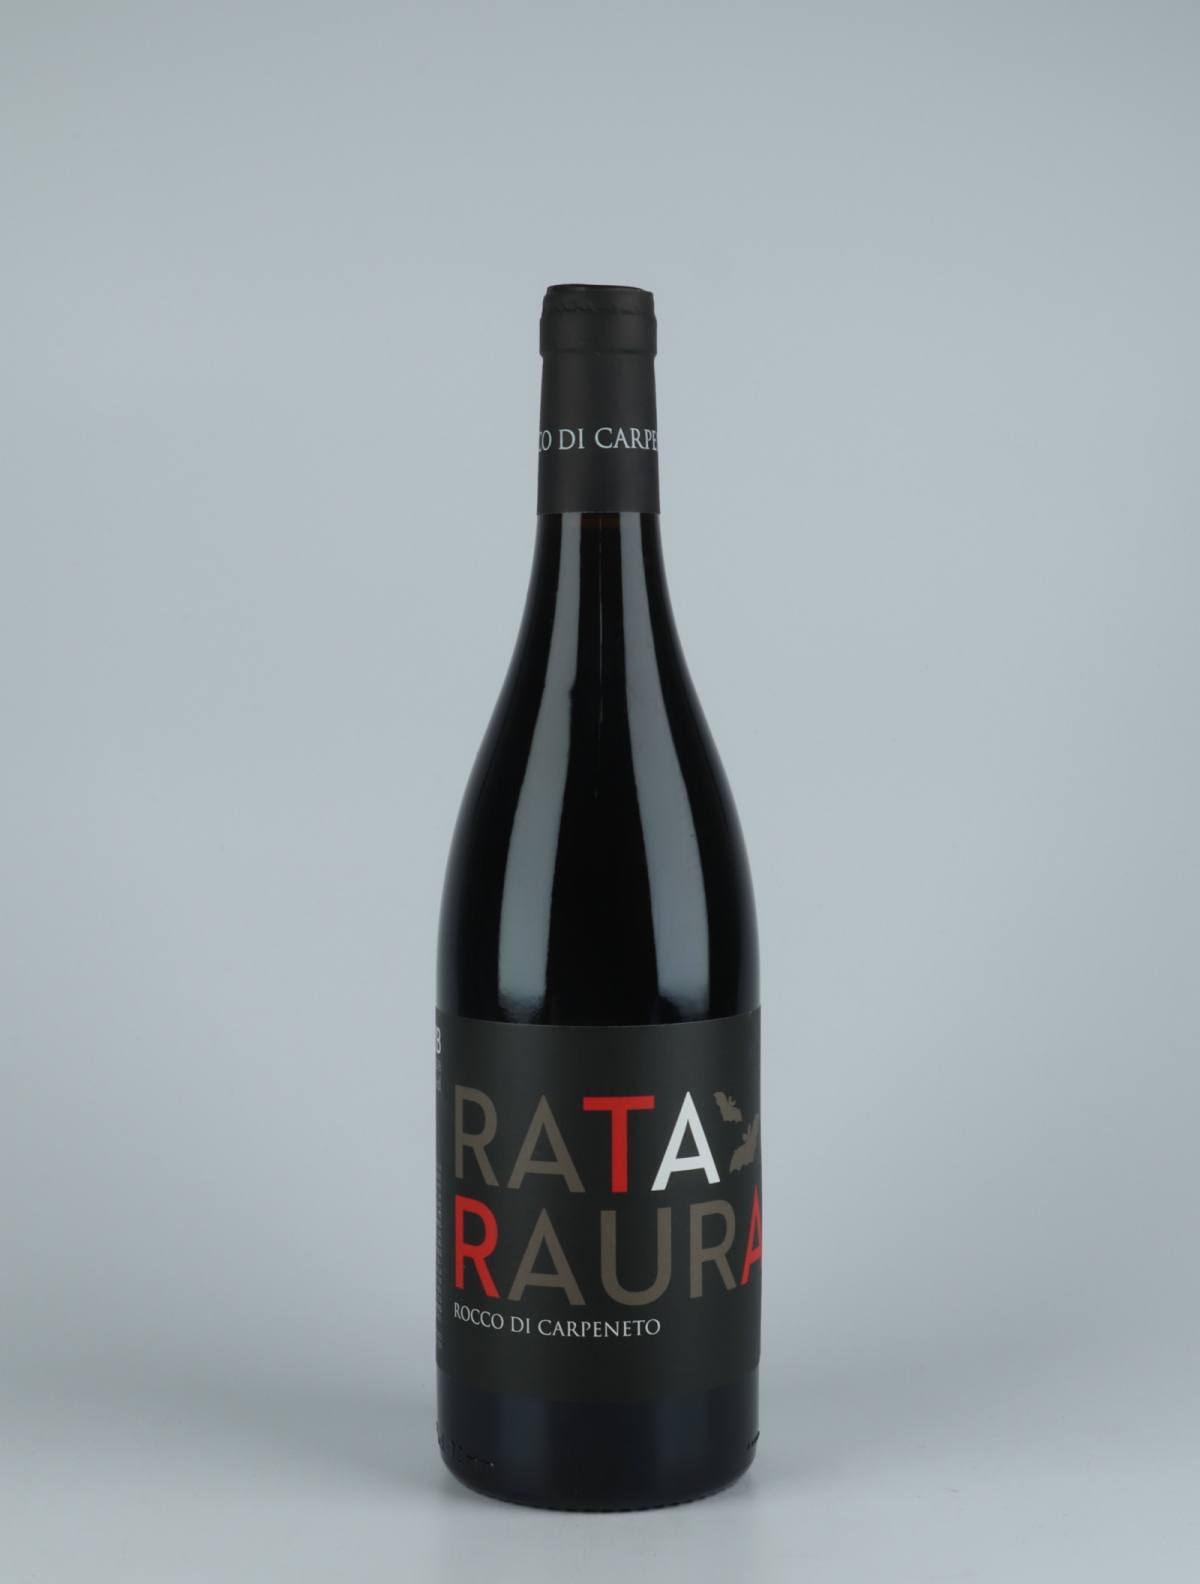 A bottle 2018 Rataraura Red wine from Rocco di Carpeneto, Piedmont in Italy